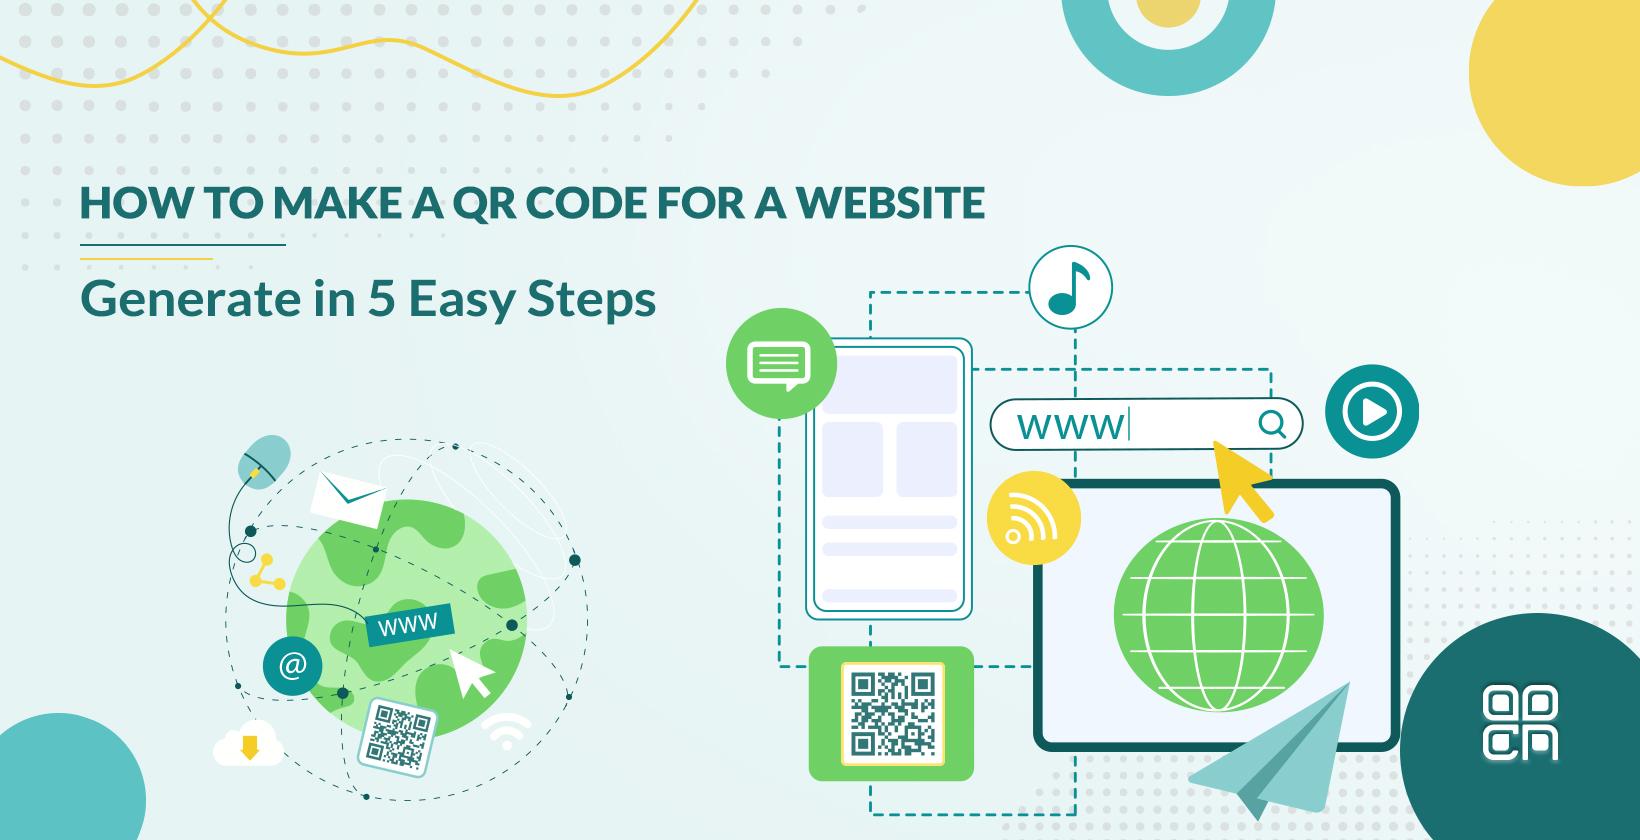 QR Code for Website